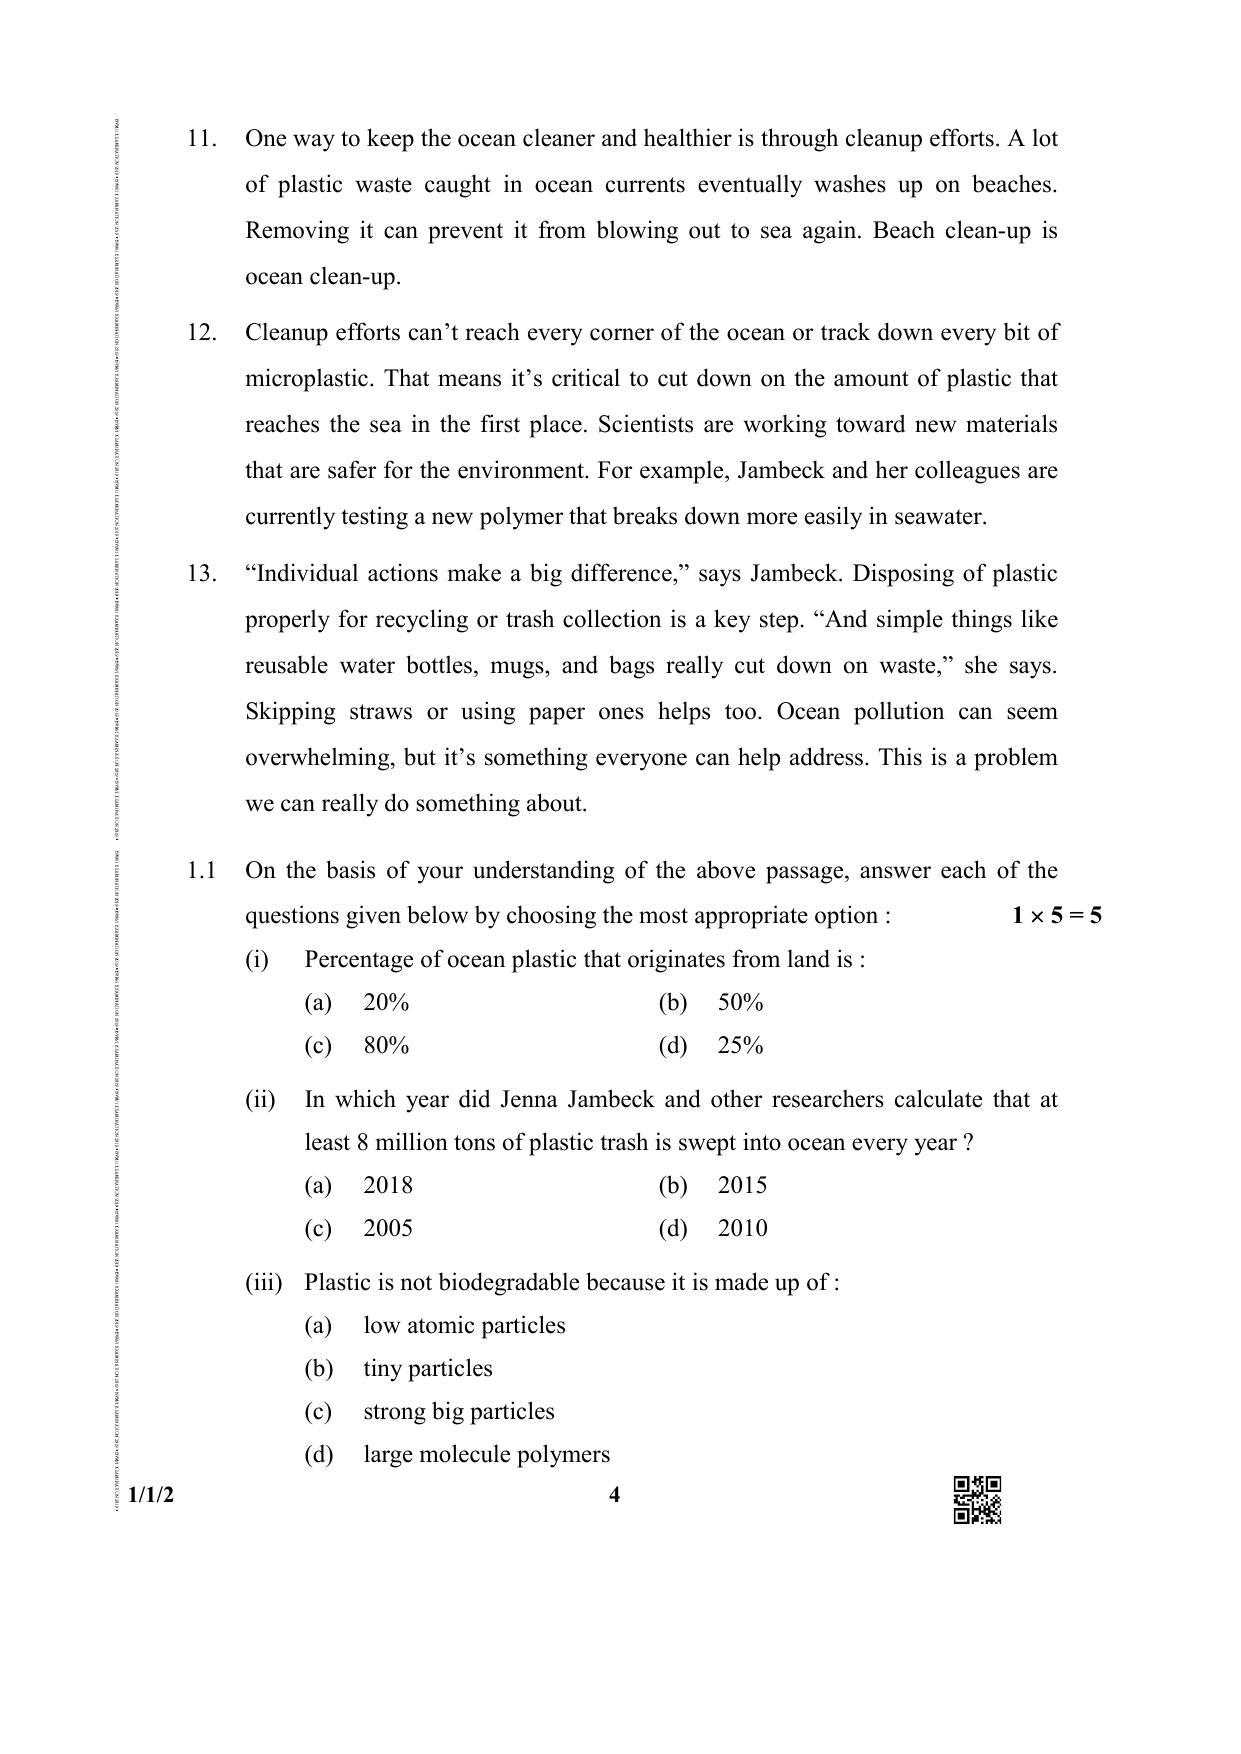 CBSE Class 12 1-1-2 (English Core) 2019 Question Paper - Page 4